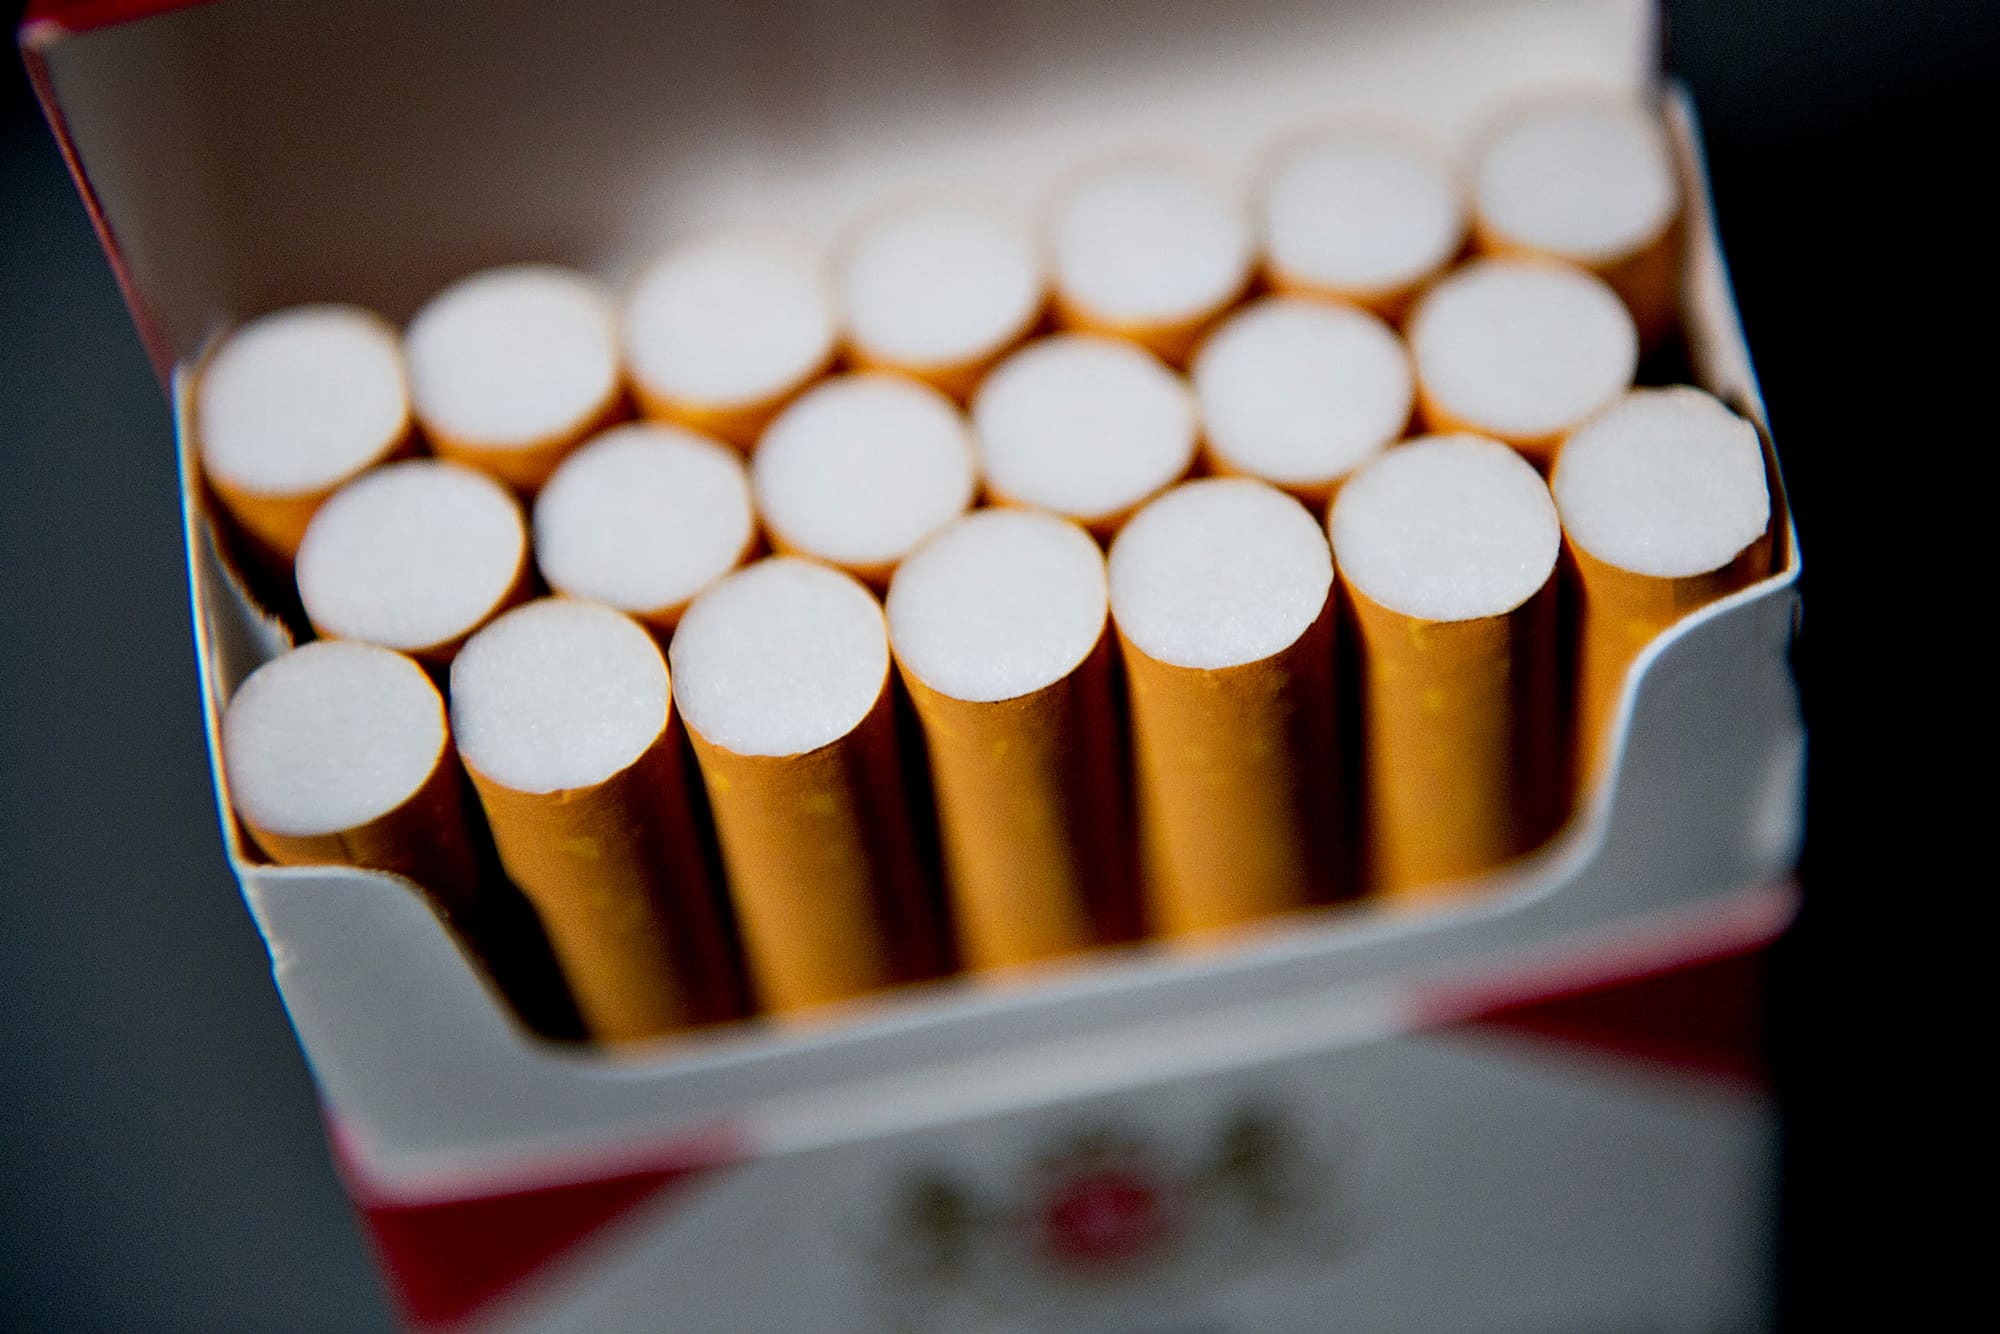 Altria Said Cigarette Industry Shipments Flattened In